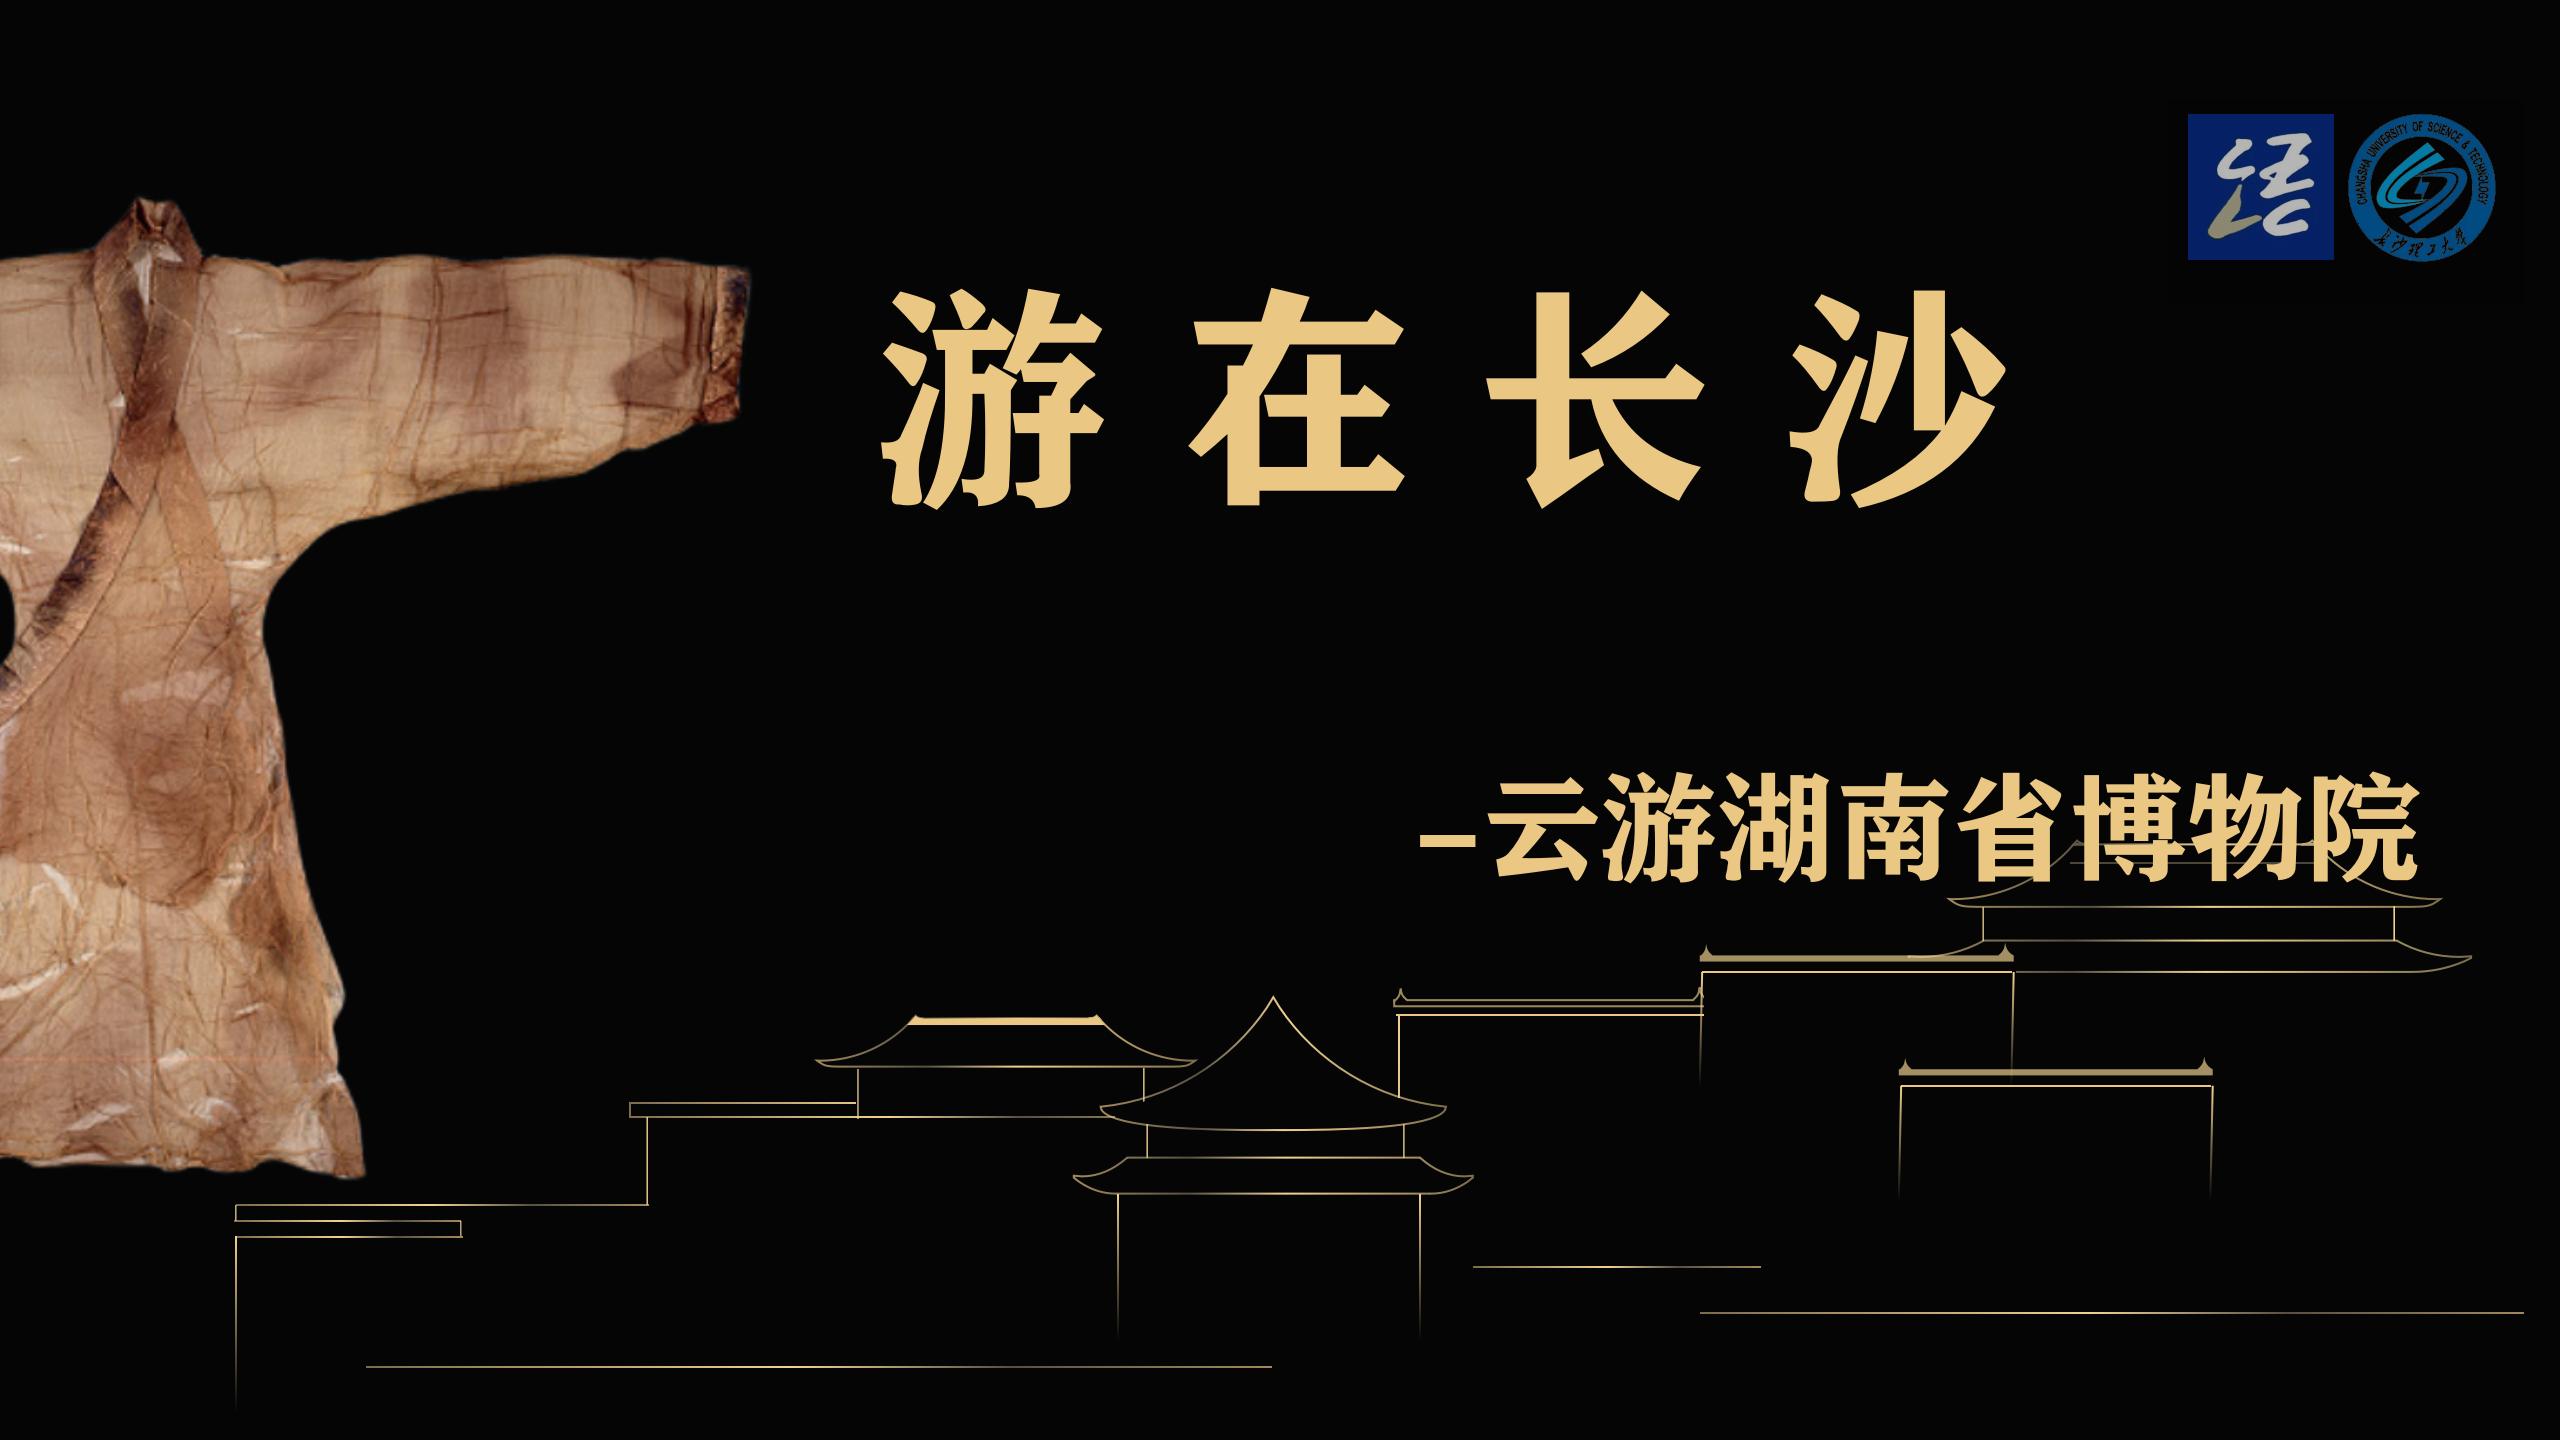 “Traveling in Changsha: Visit Hunan Museum Online”